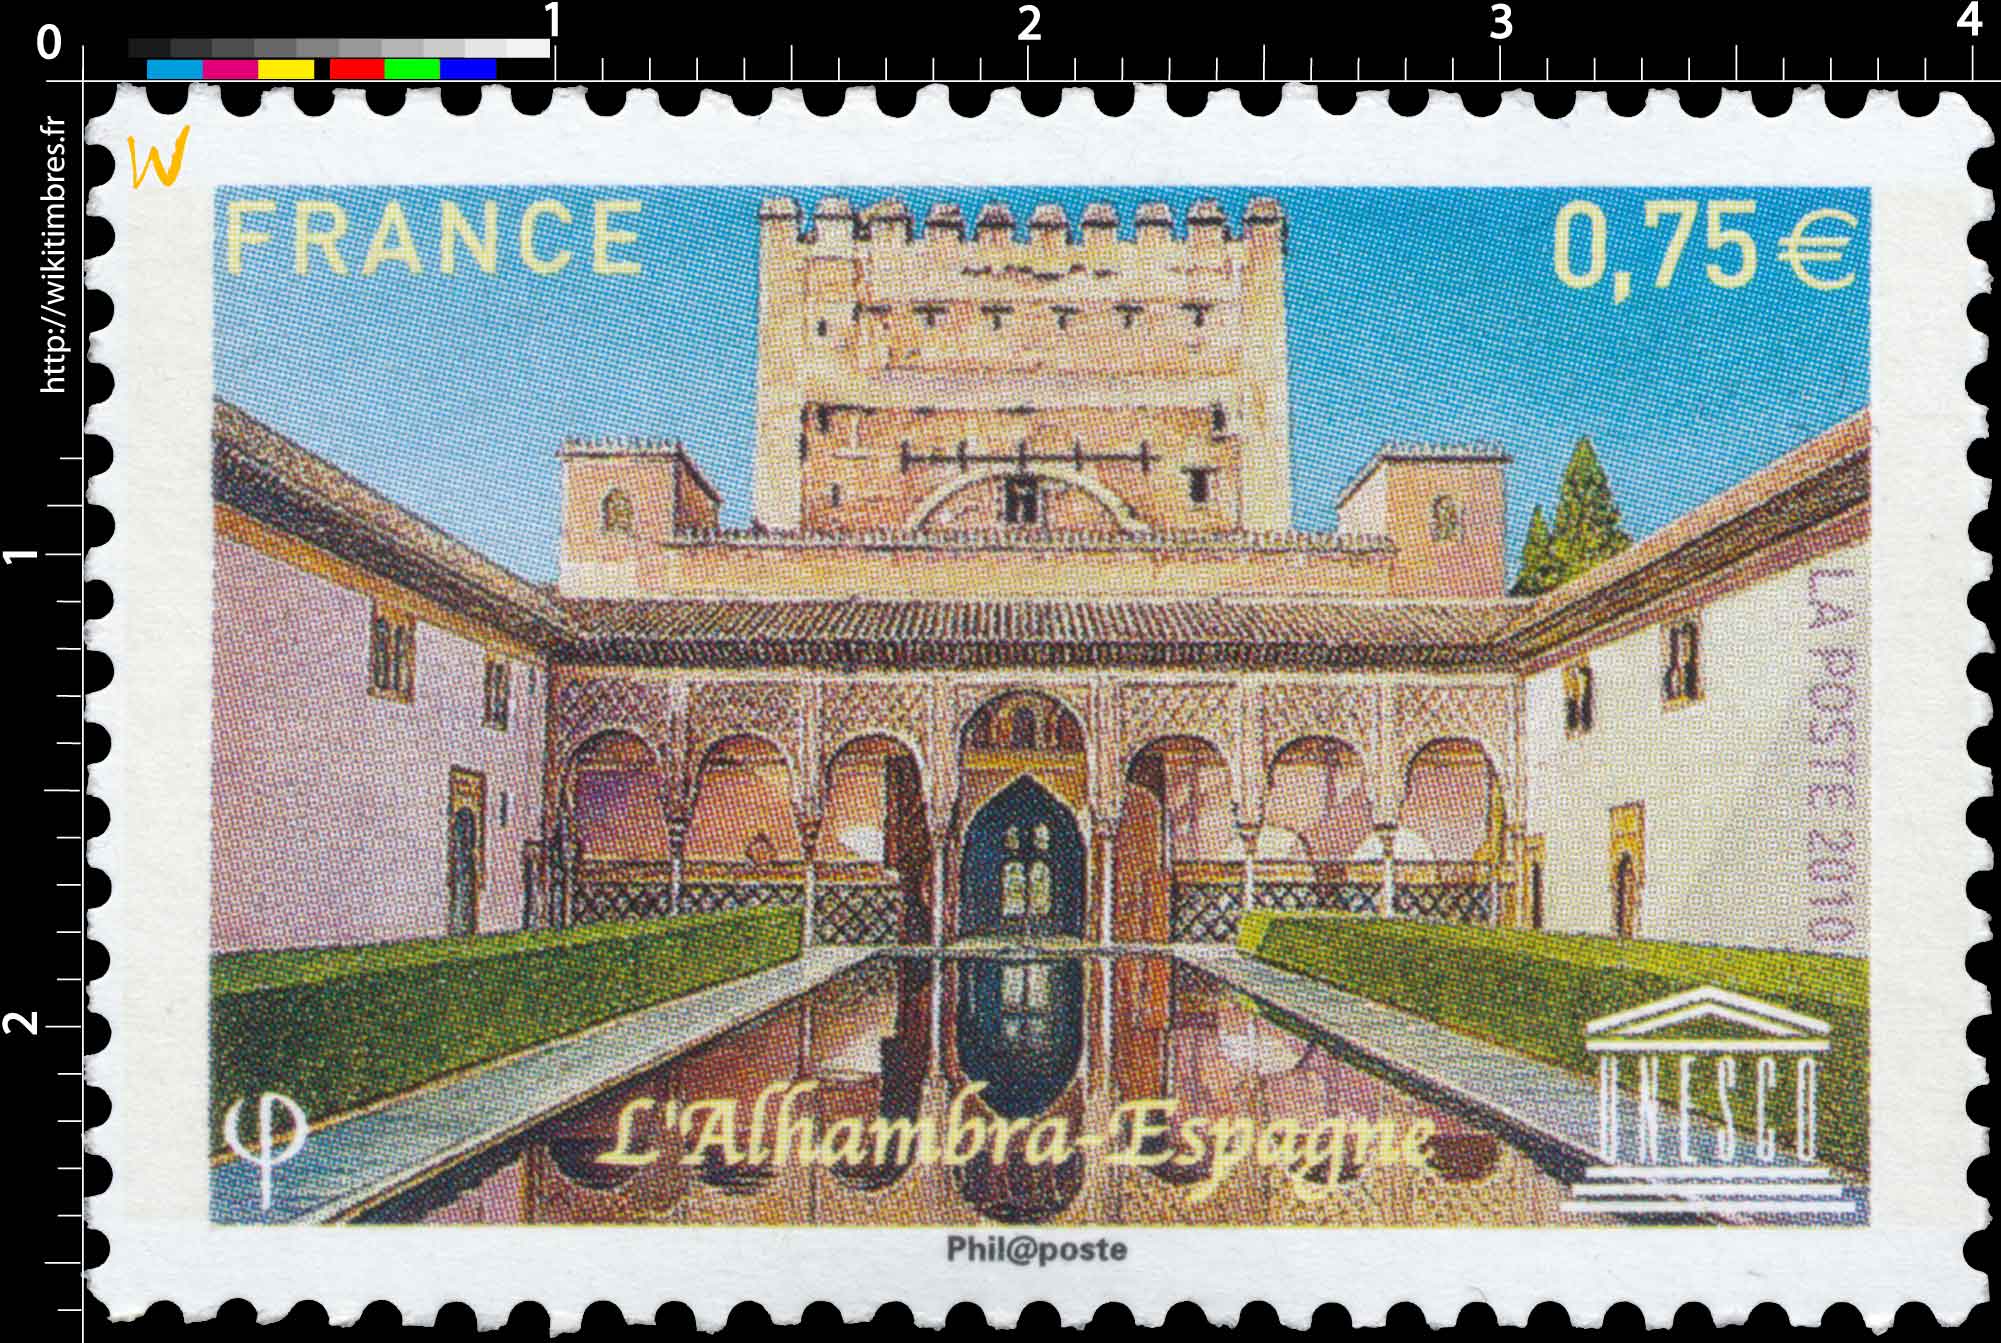 2010 Unesco - L’Alhambra Espagne